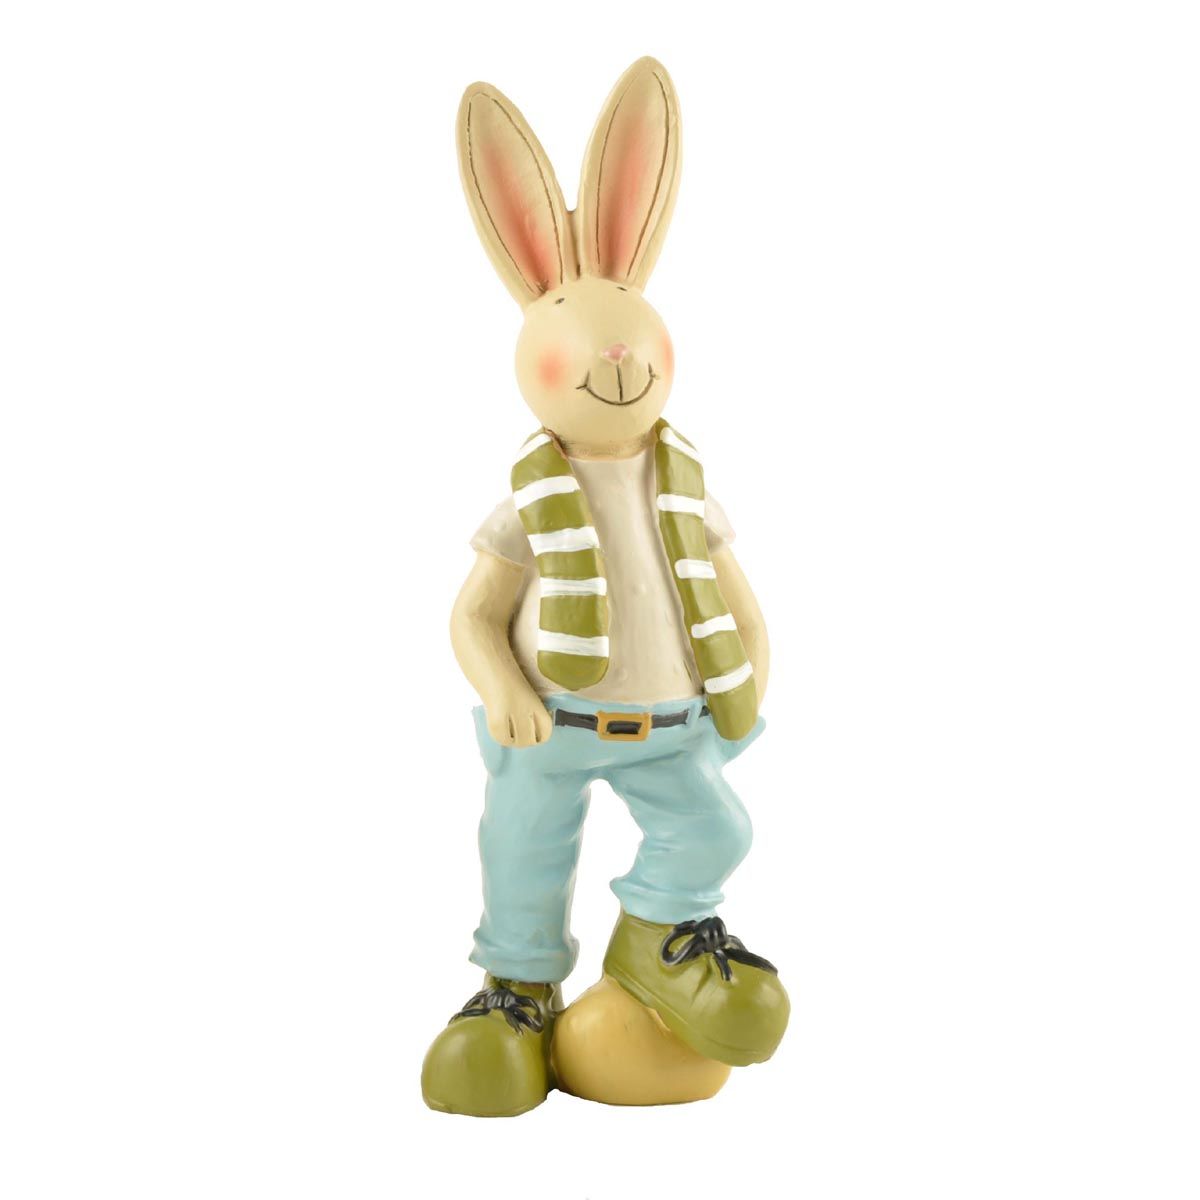 Hot Sale Resin Garden Animal Figurine Rabbit Bunny Statue with Egg Medium